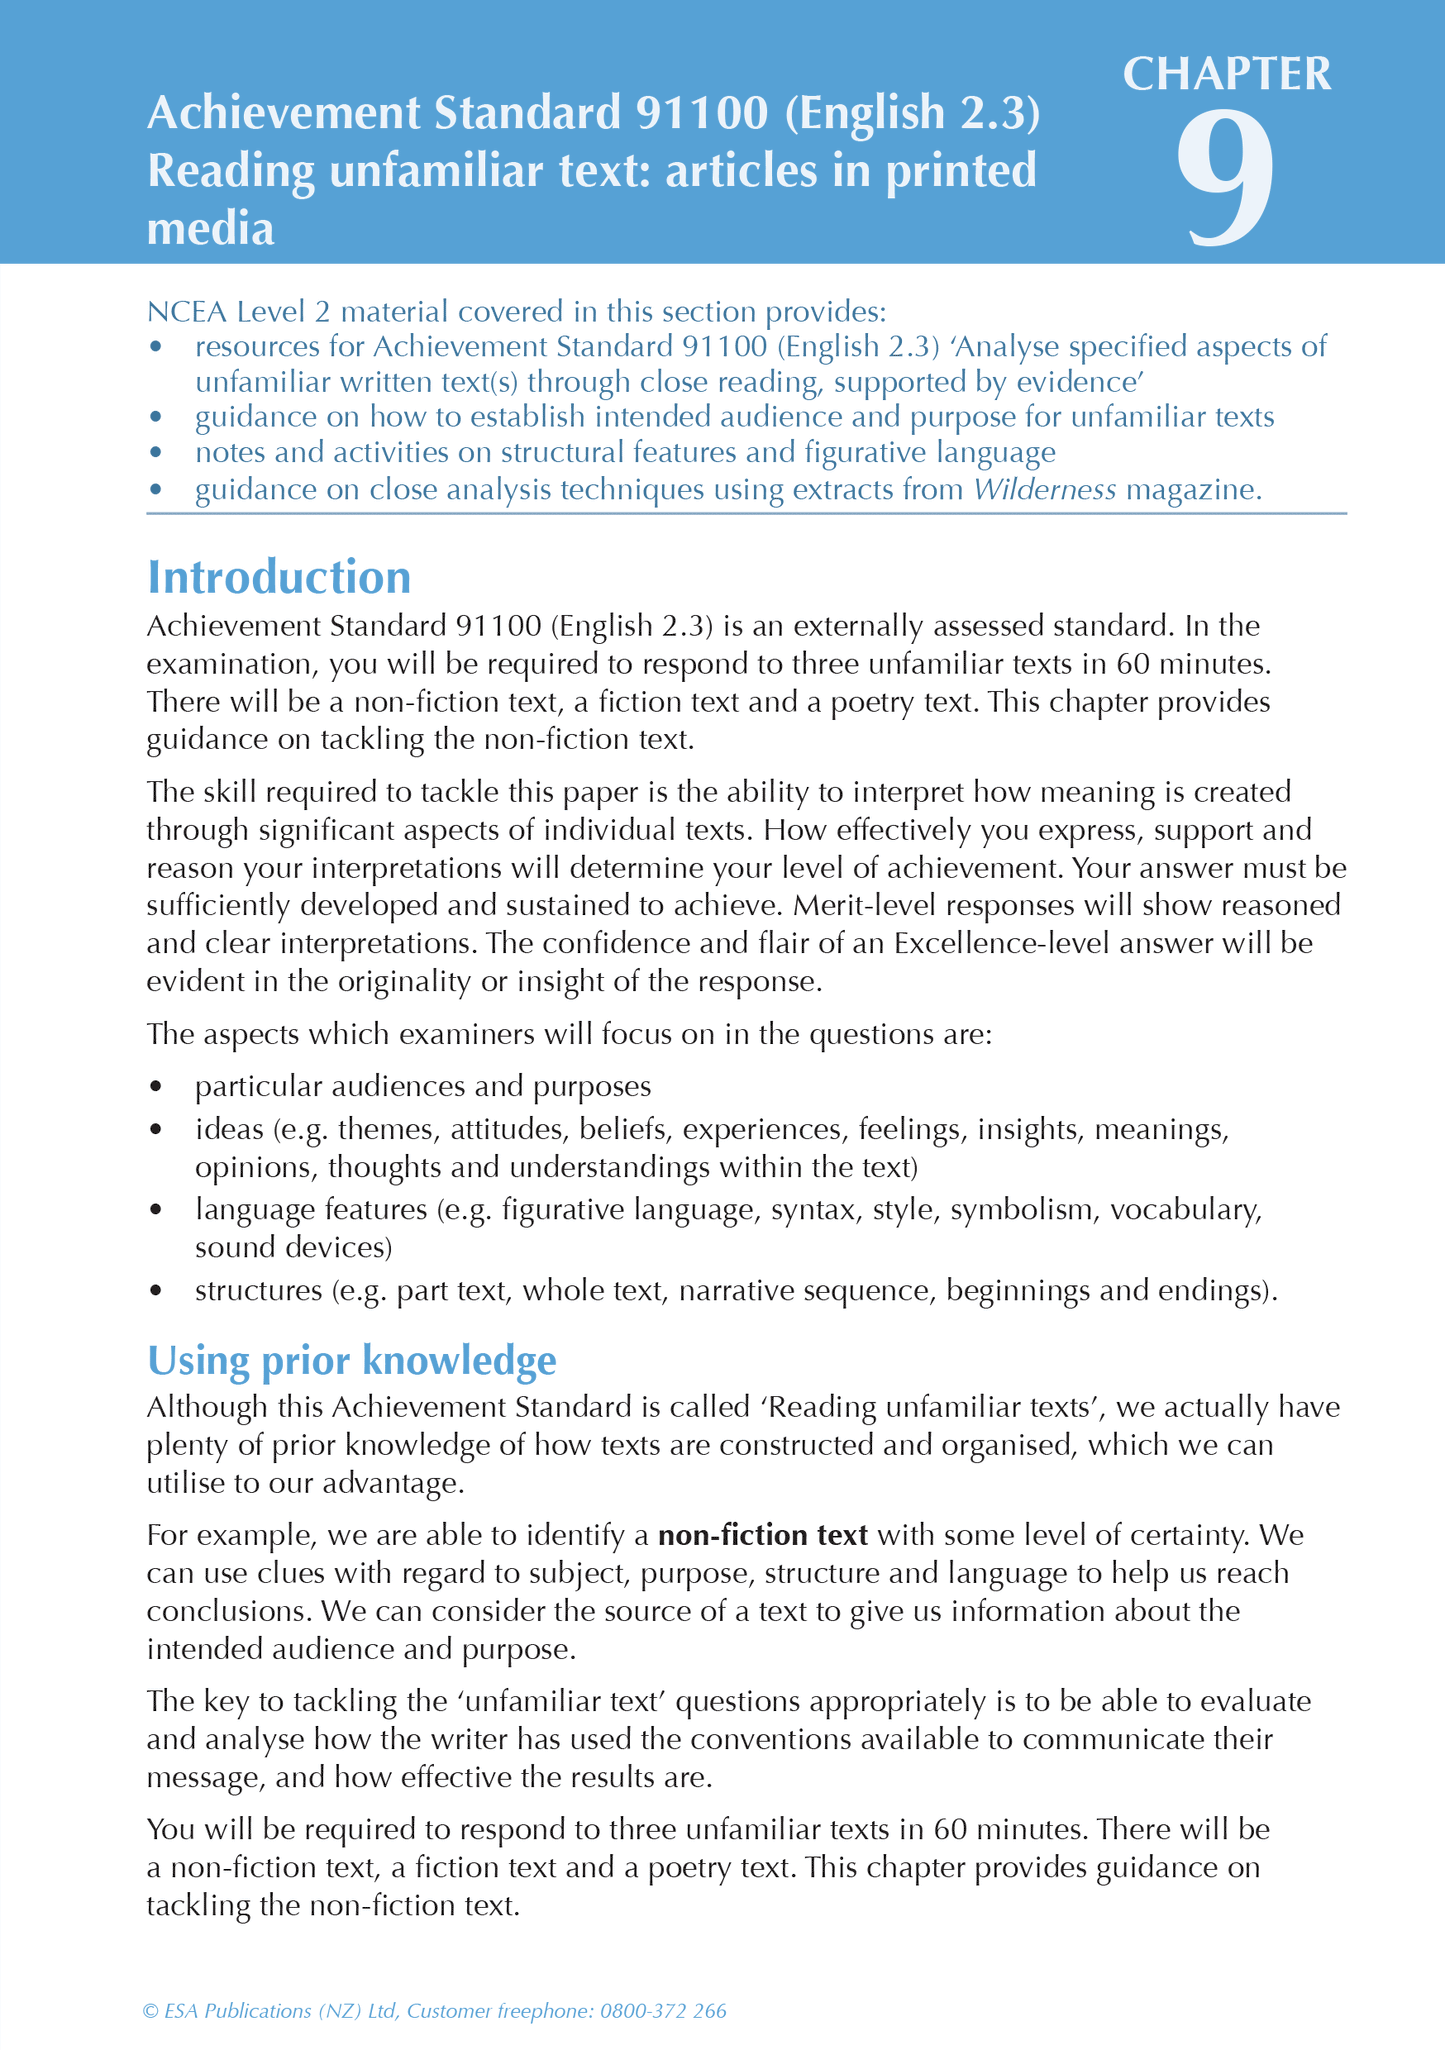 Level 2 English ESA Study Guide